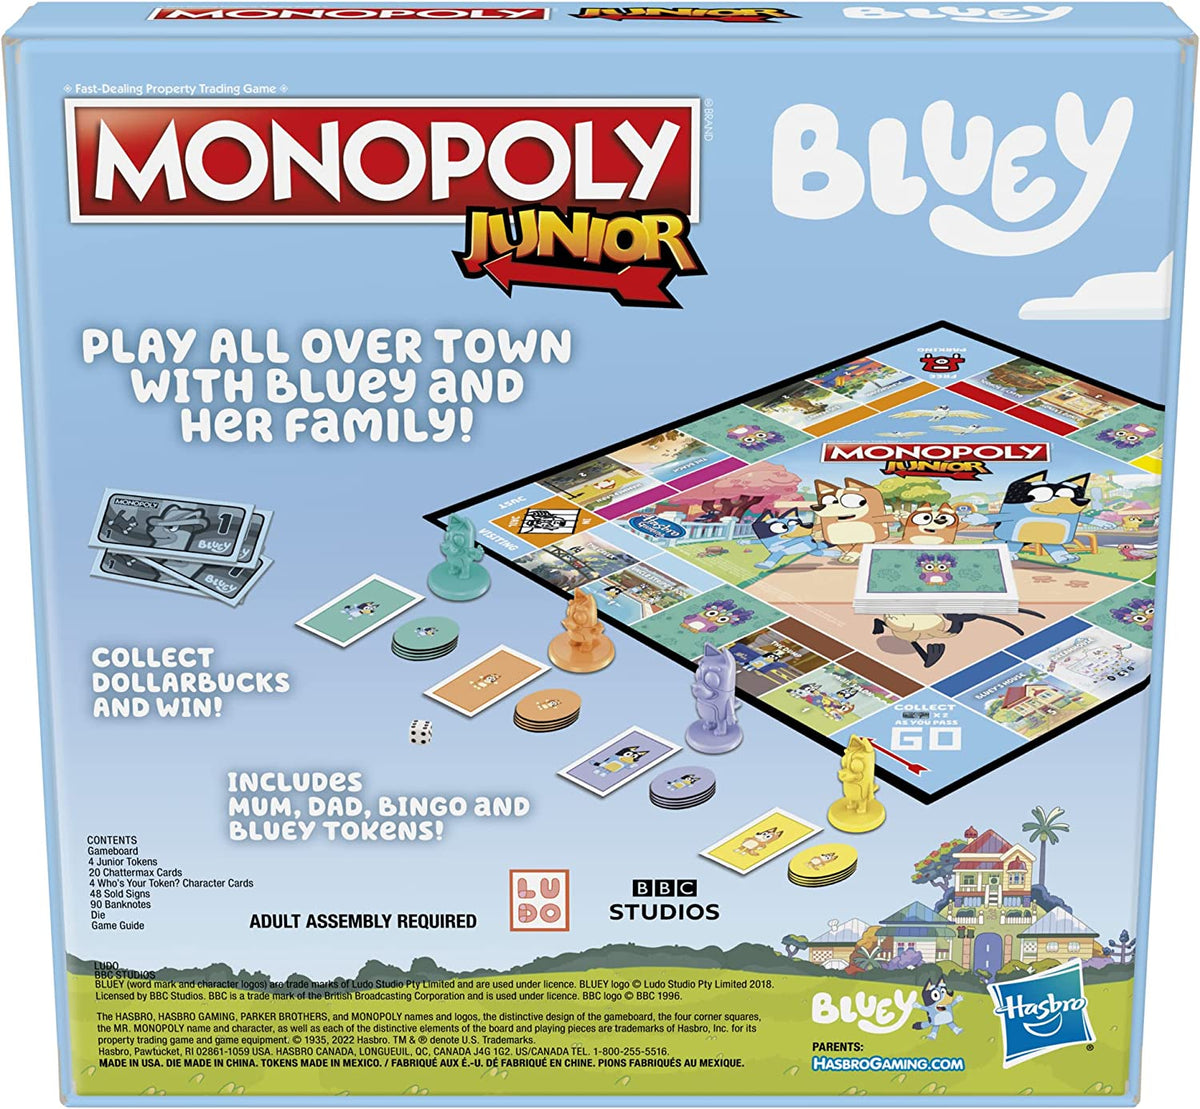 Monopoly Junior - Bluey